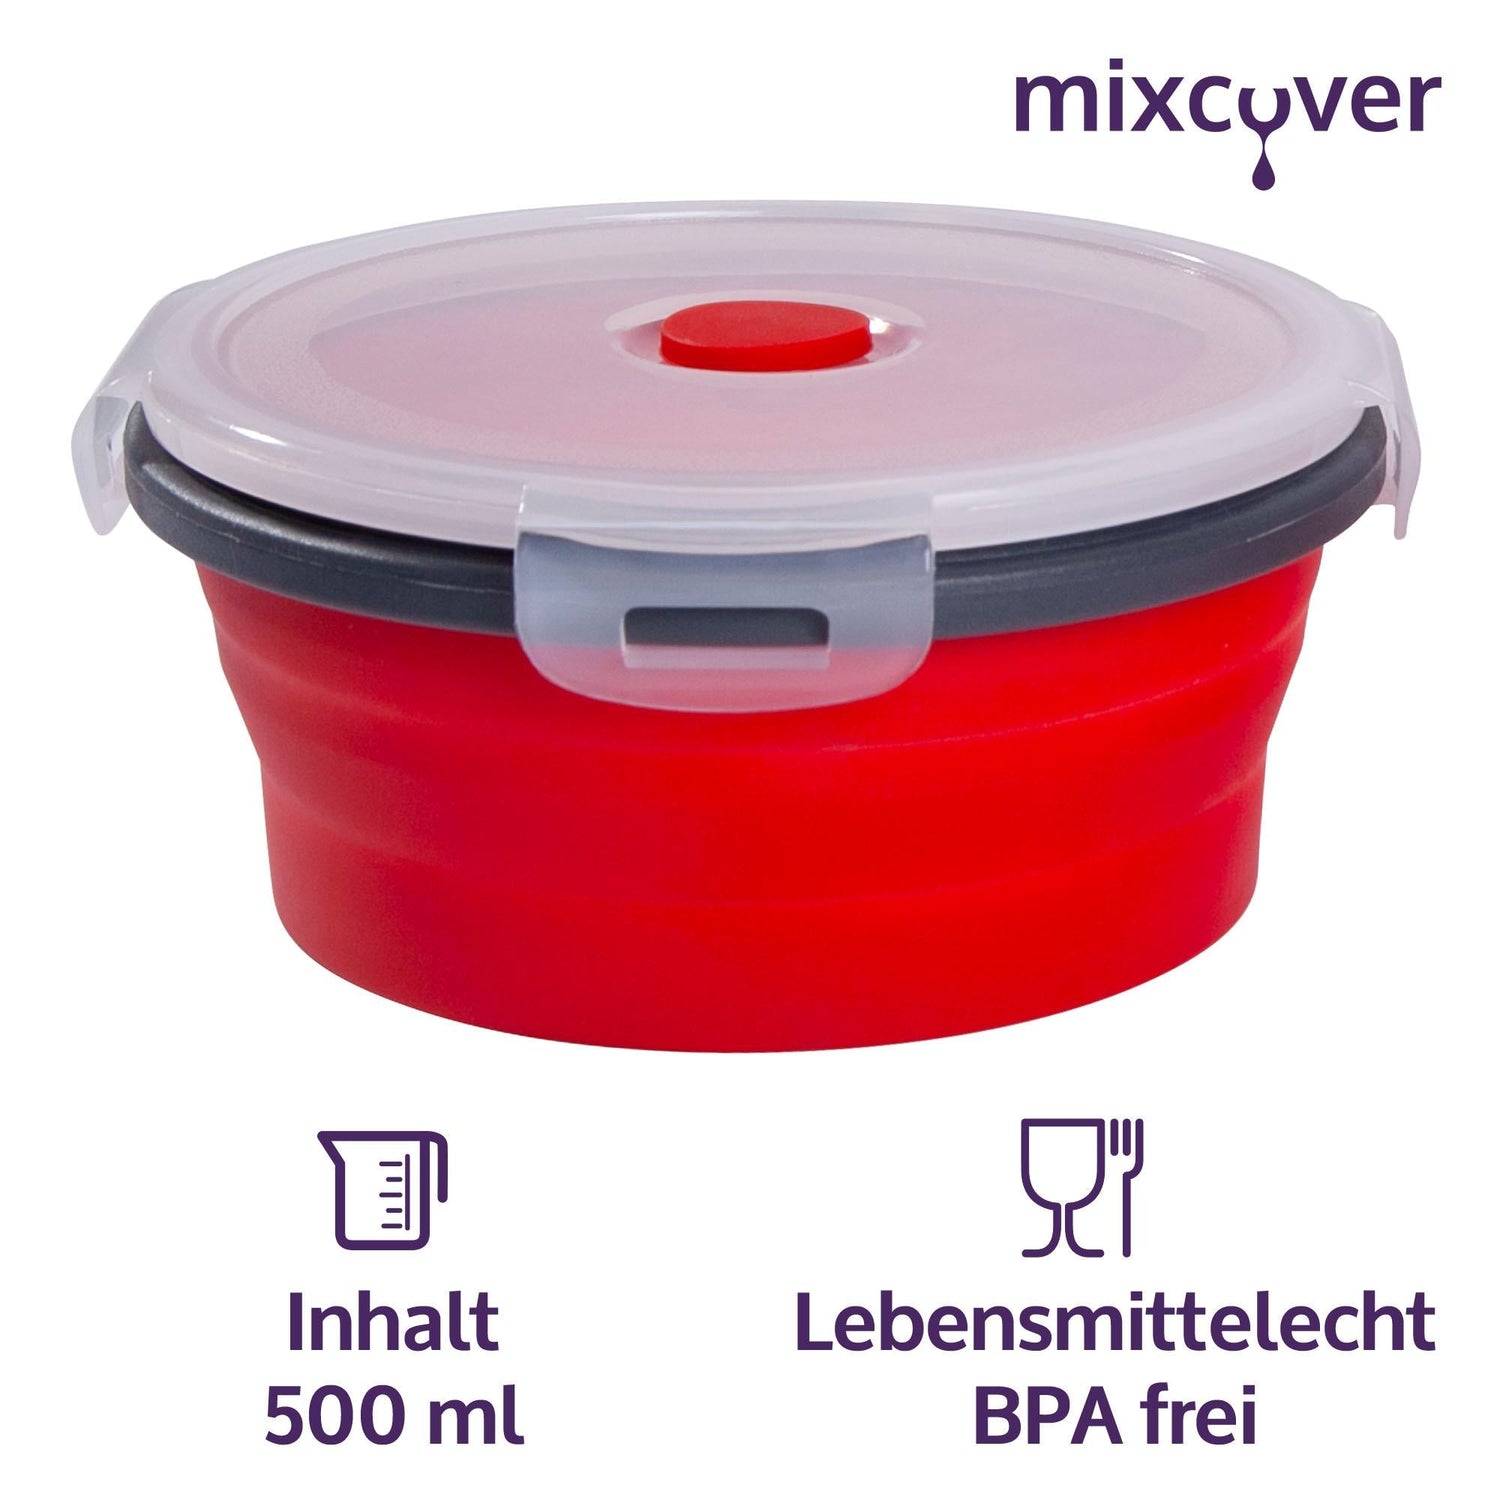 mixcover faltbare Frischhaltedose mit Deckel aus Silikon Bentobox Brotdose Lunchbox Picknick Camping Schüssel BPA-frei platzsparend 500 ml rot - Mixcover - Mixcover